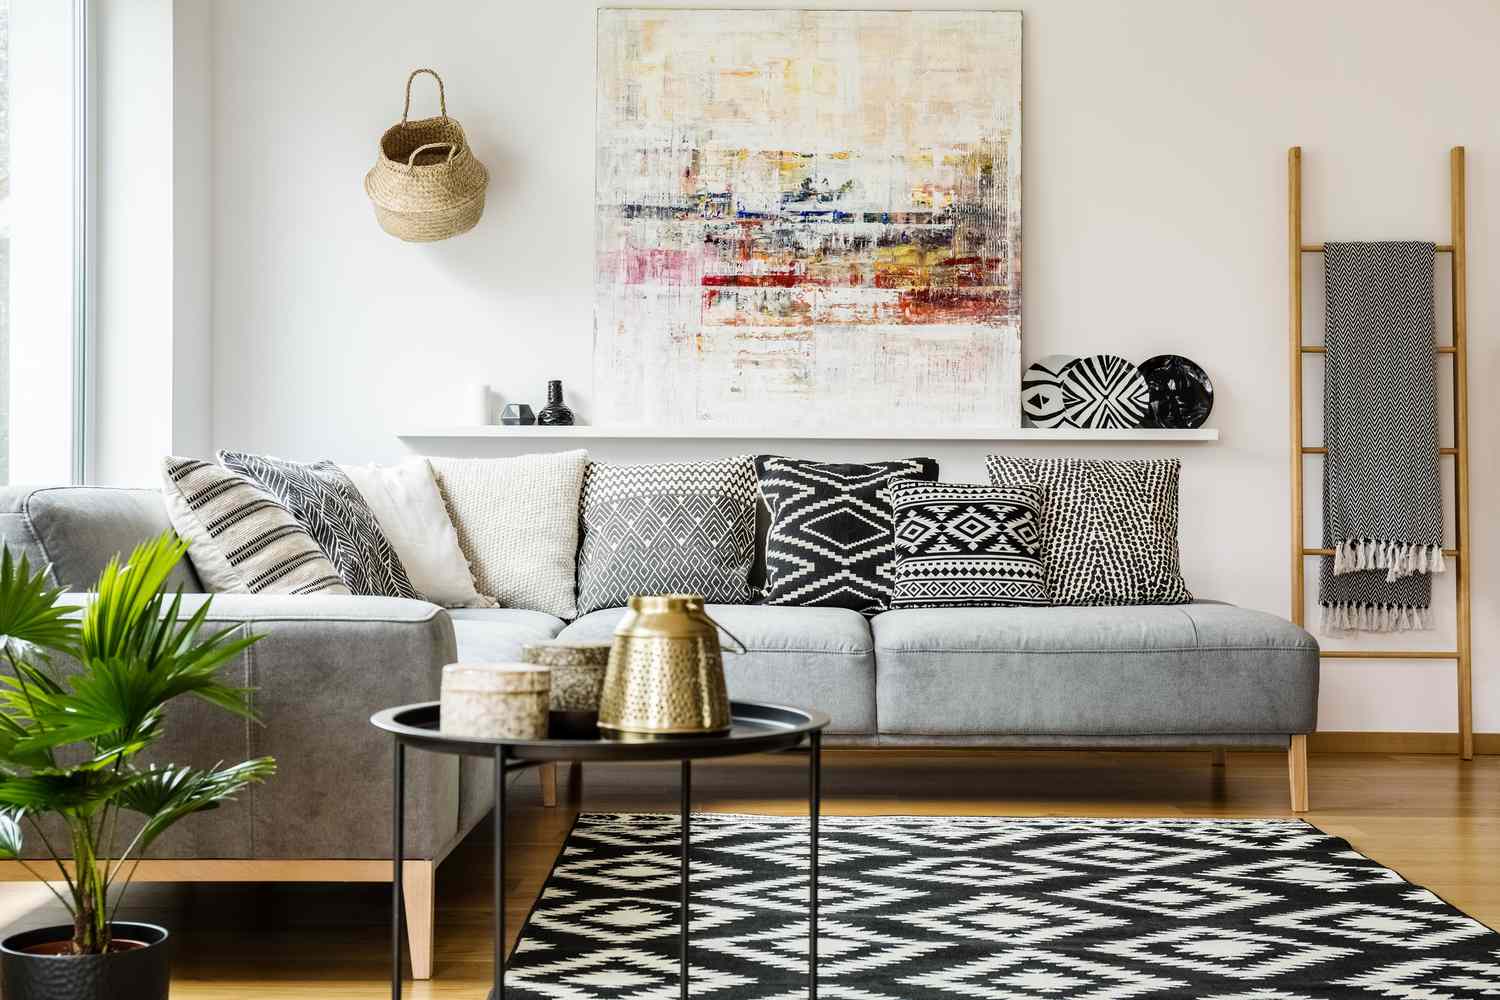 A boho style living room